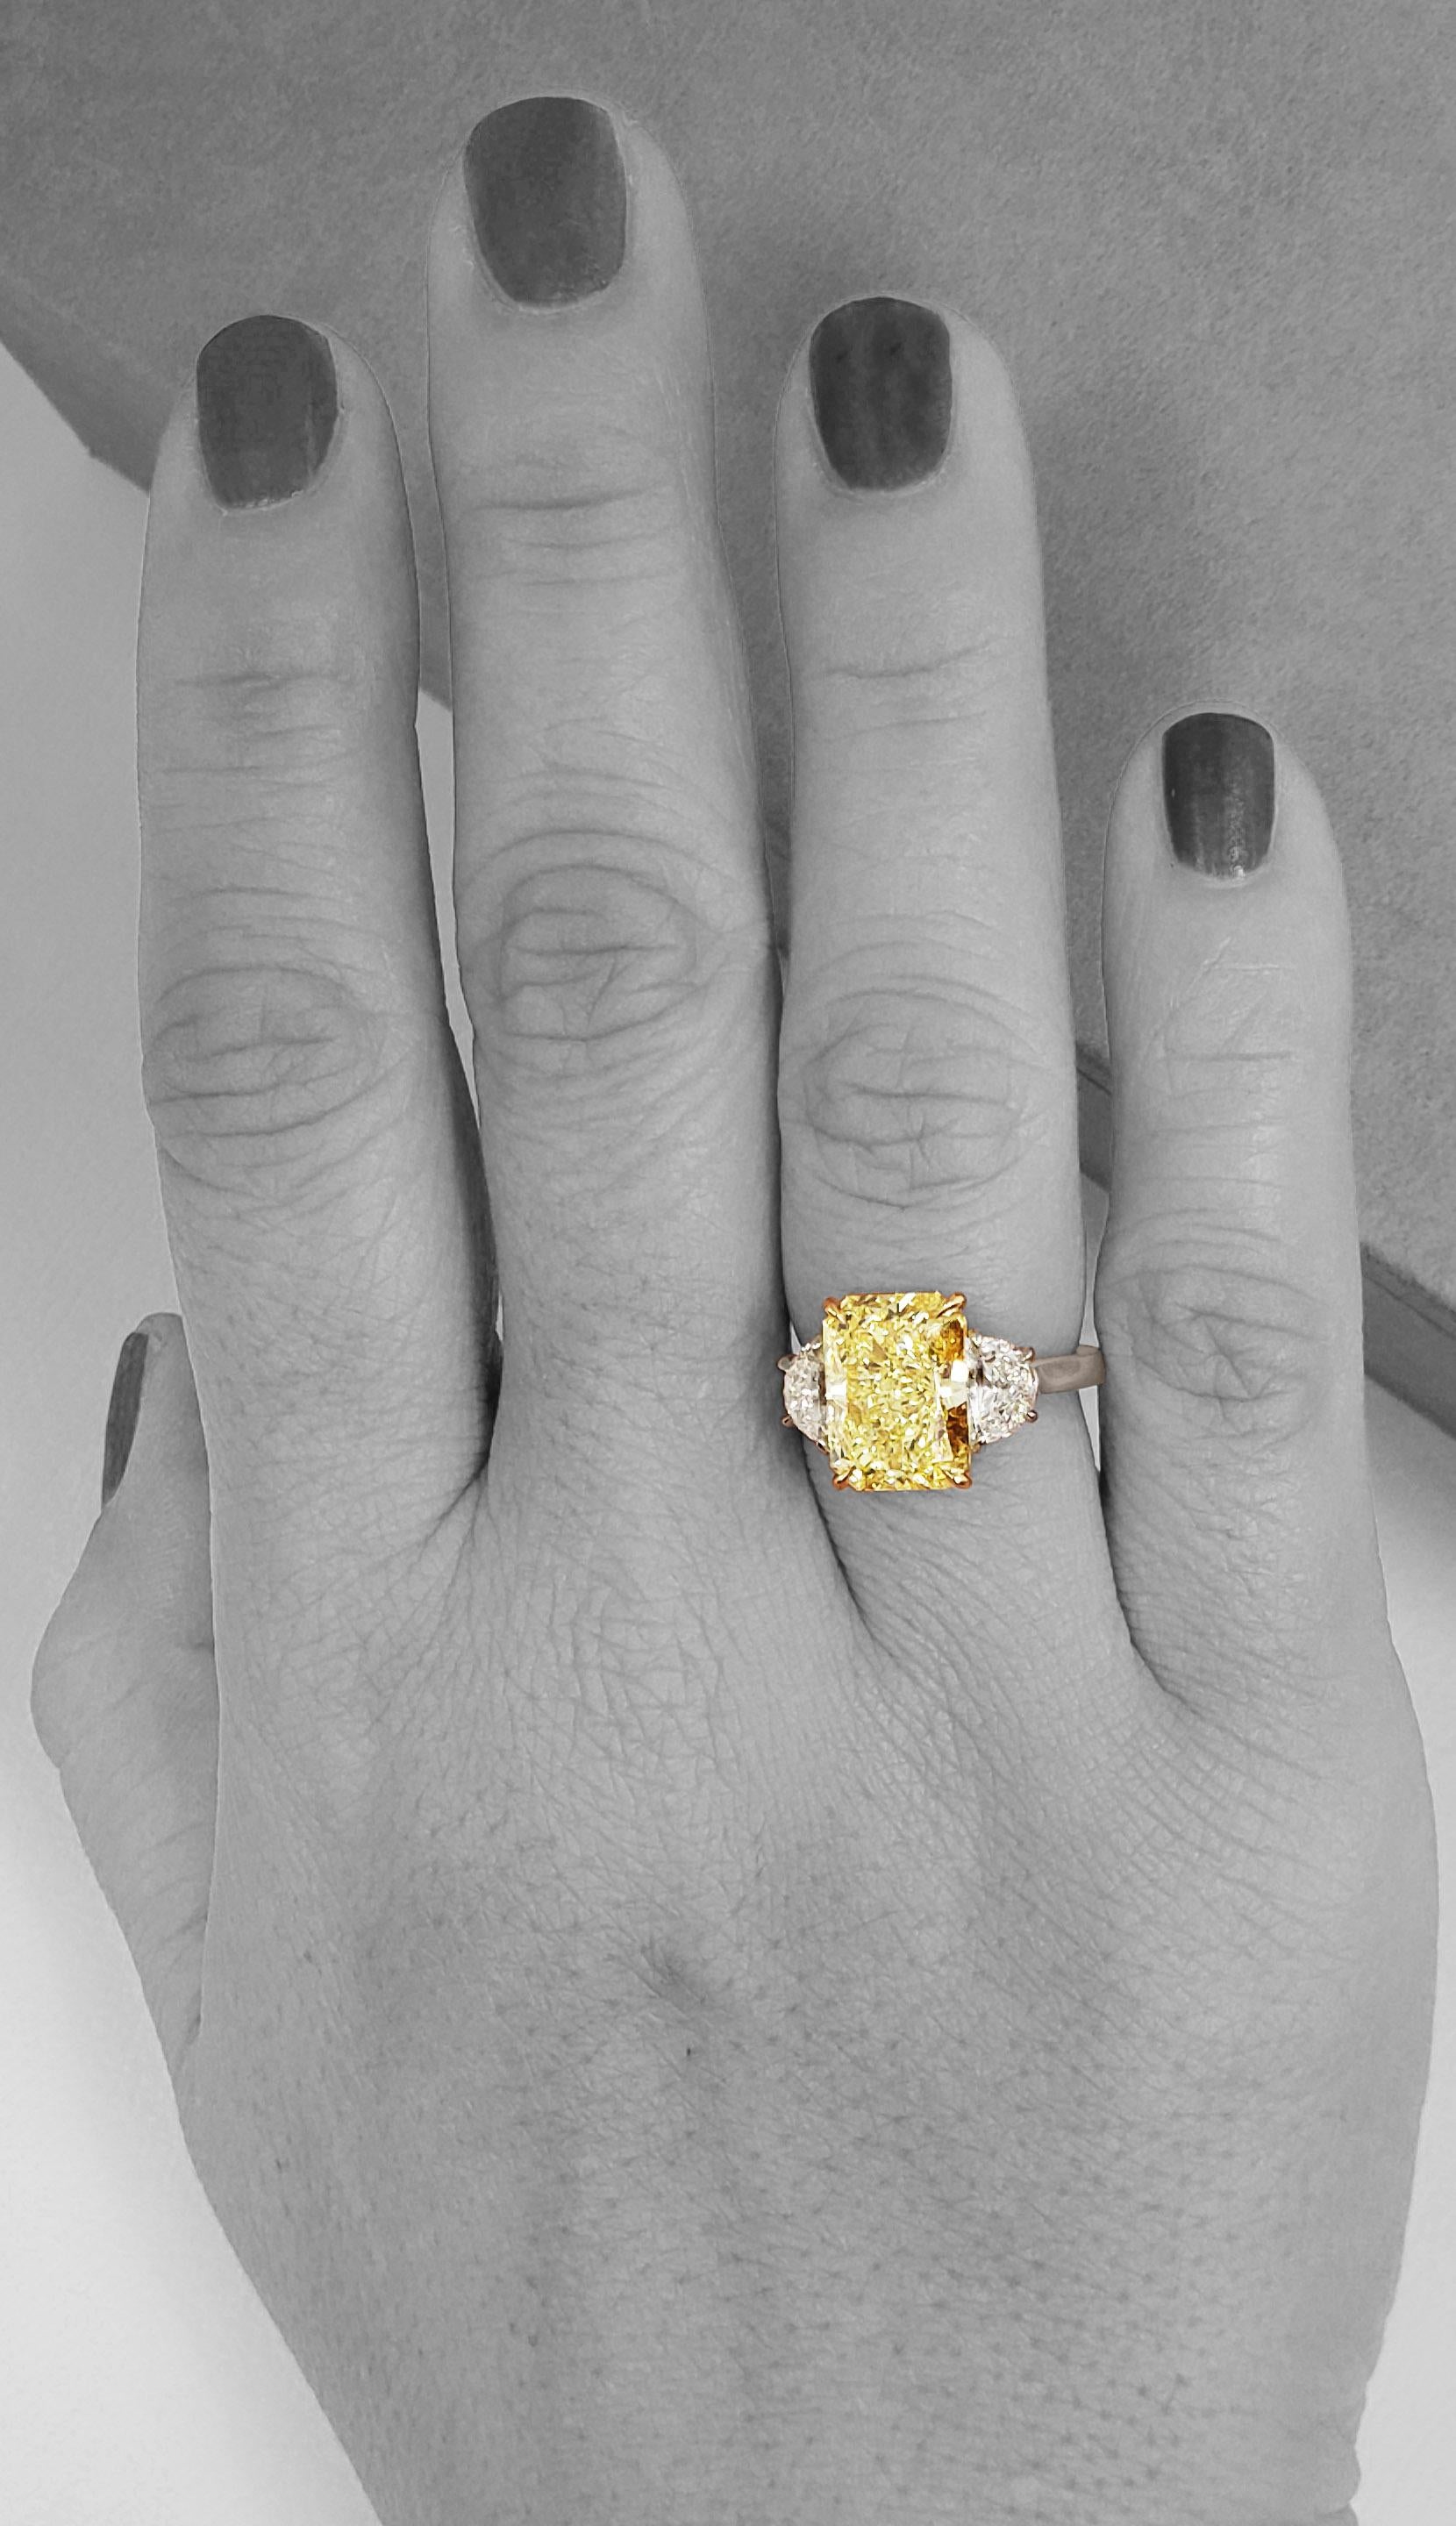 Scarselli 5 Karat Fancy Intense Yellow Diamond Ring in Platin GIA zertifiziert Damen